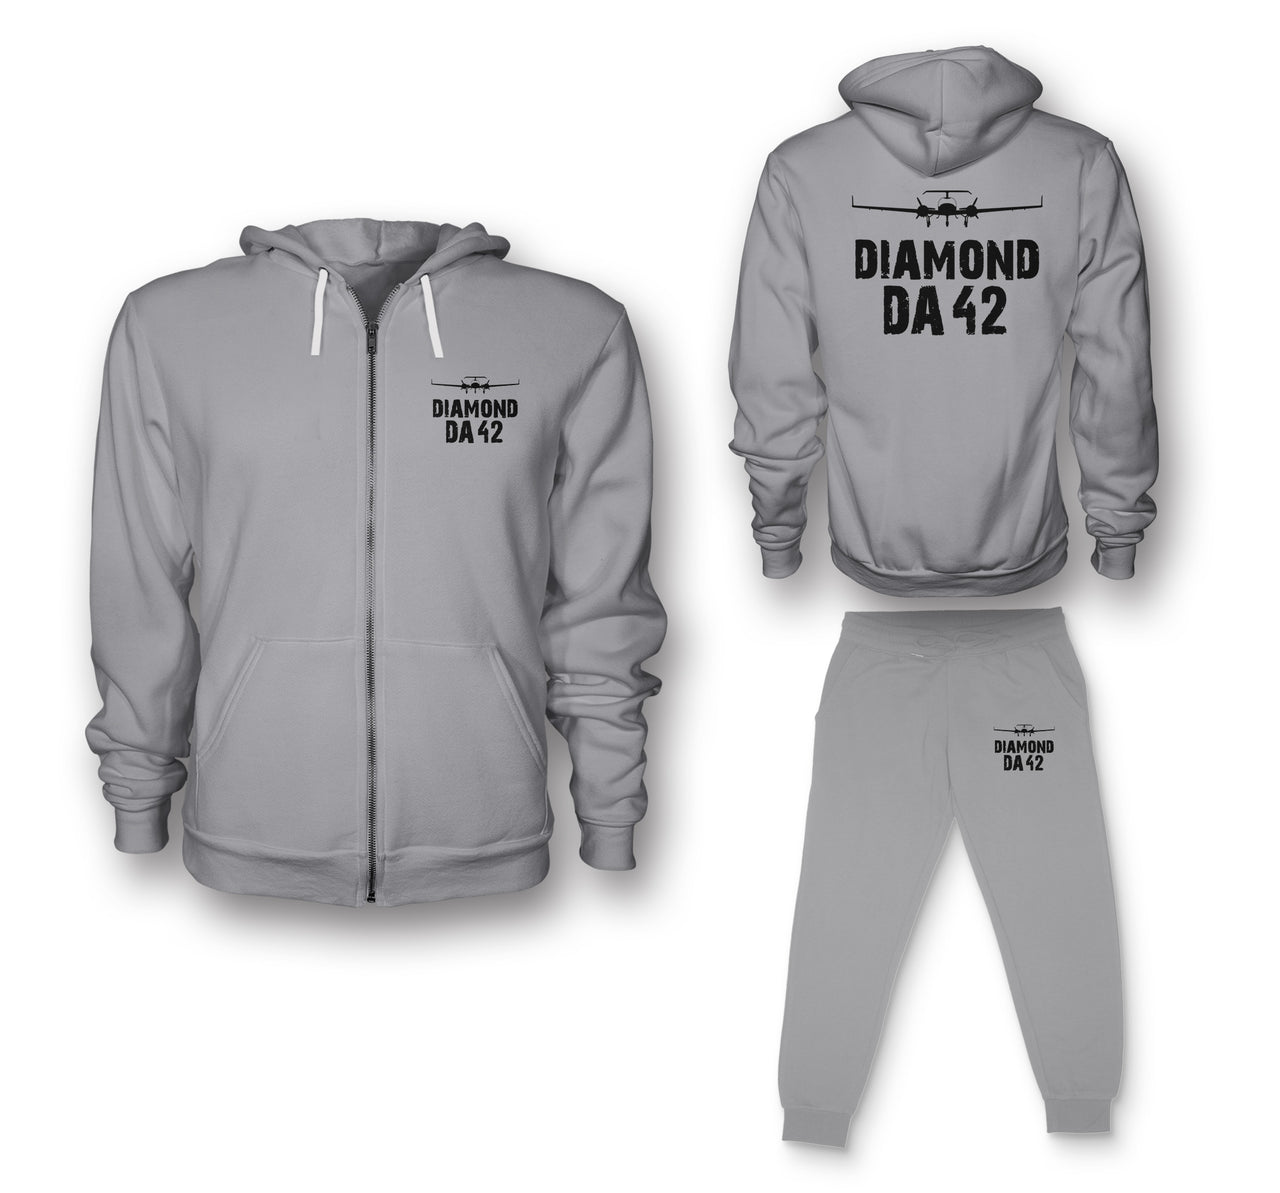 Diamond DA42 & Plane Designed Zipped Hoodies & Sweatpants Set